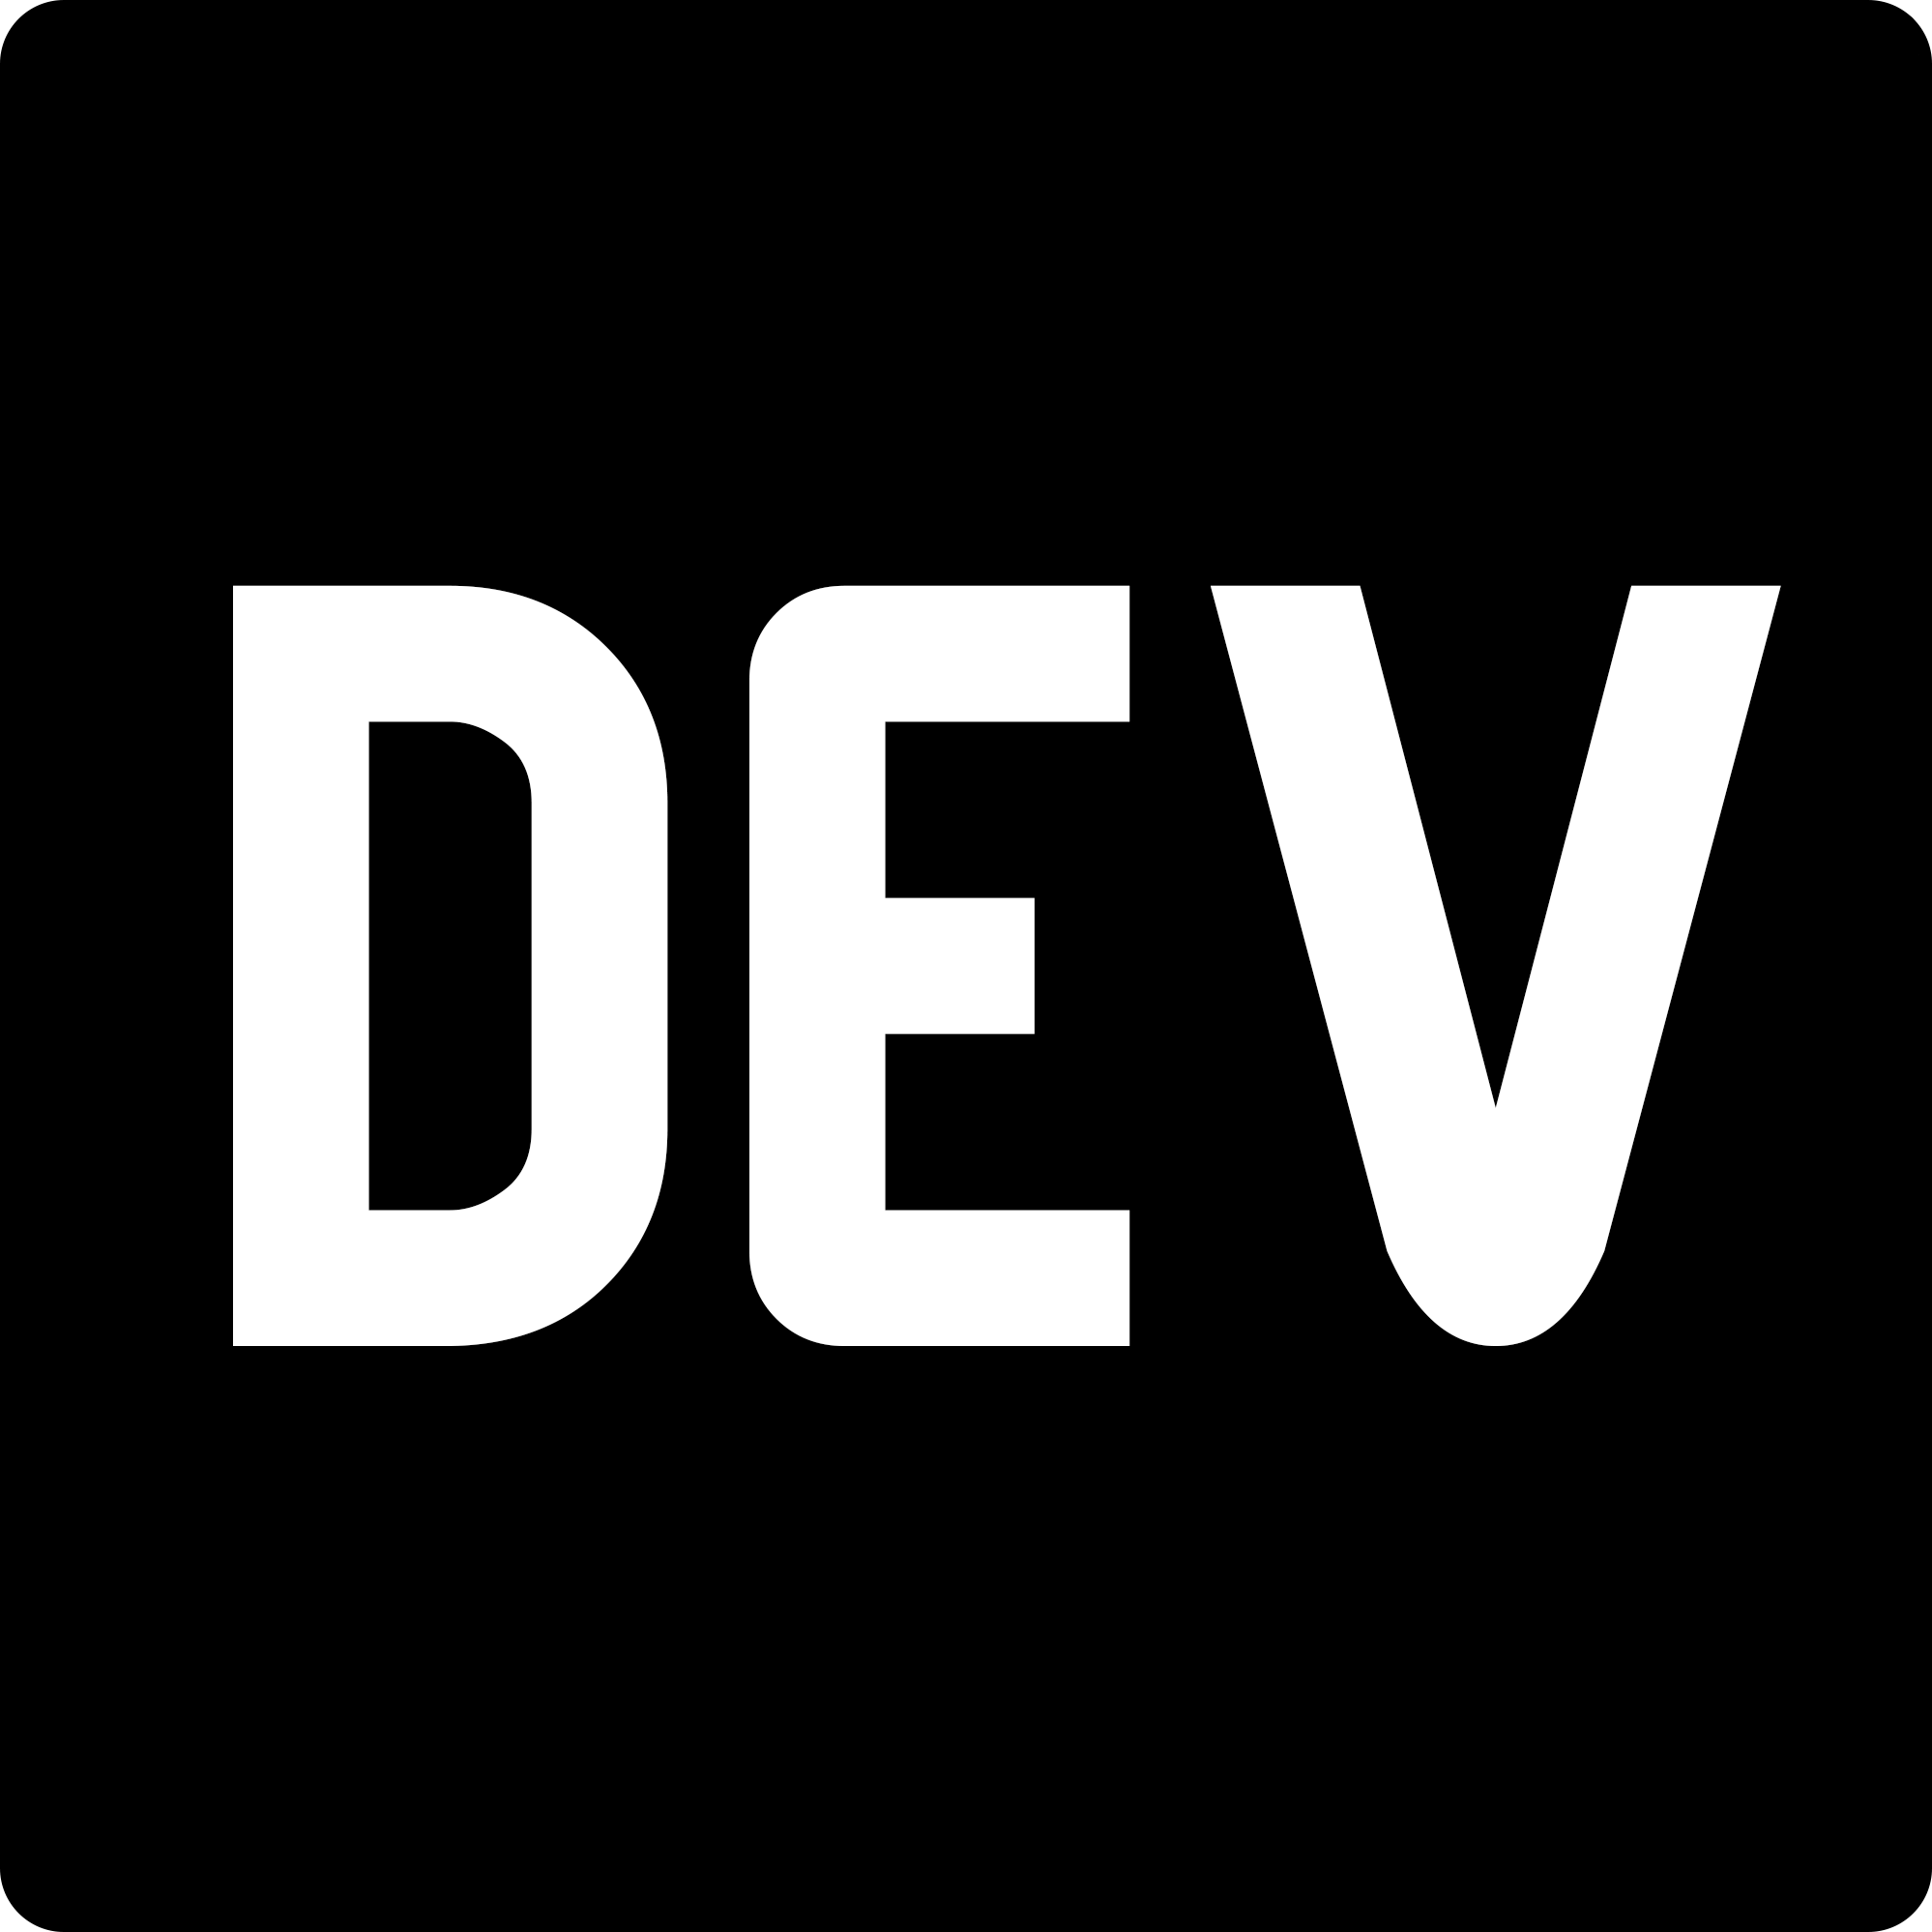 The DEV logo